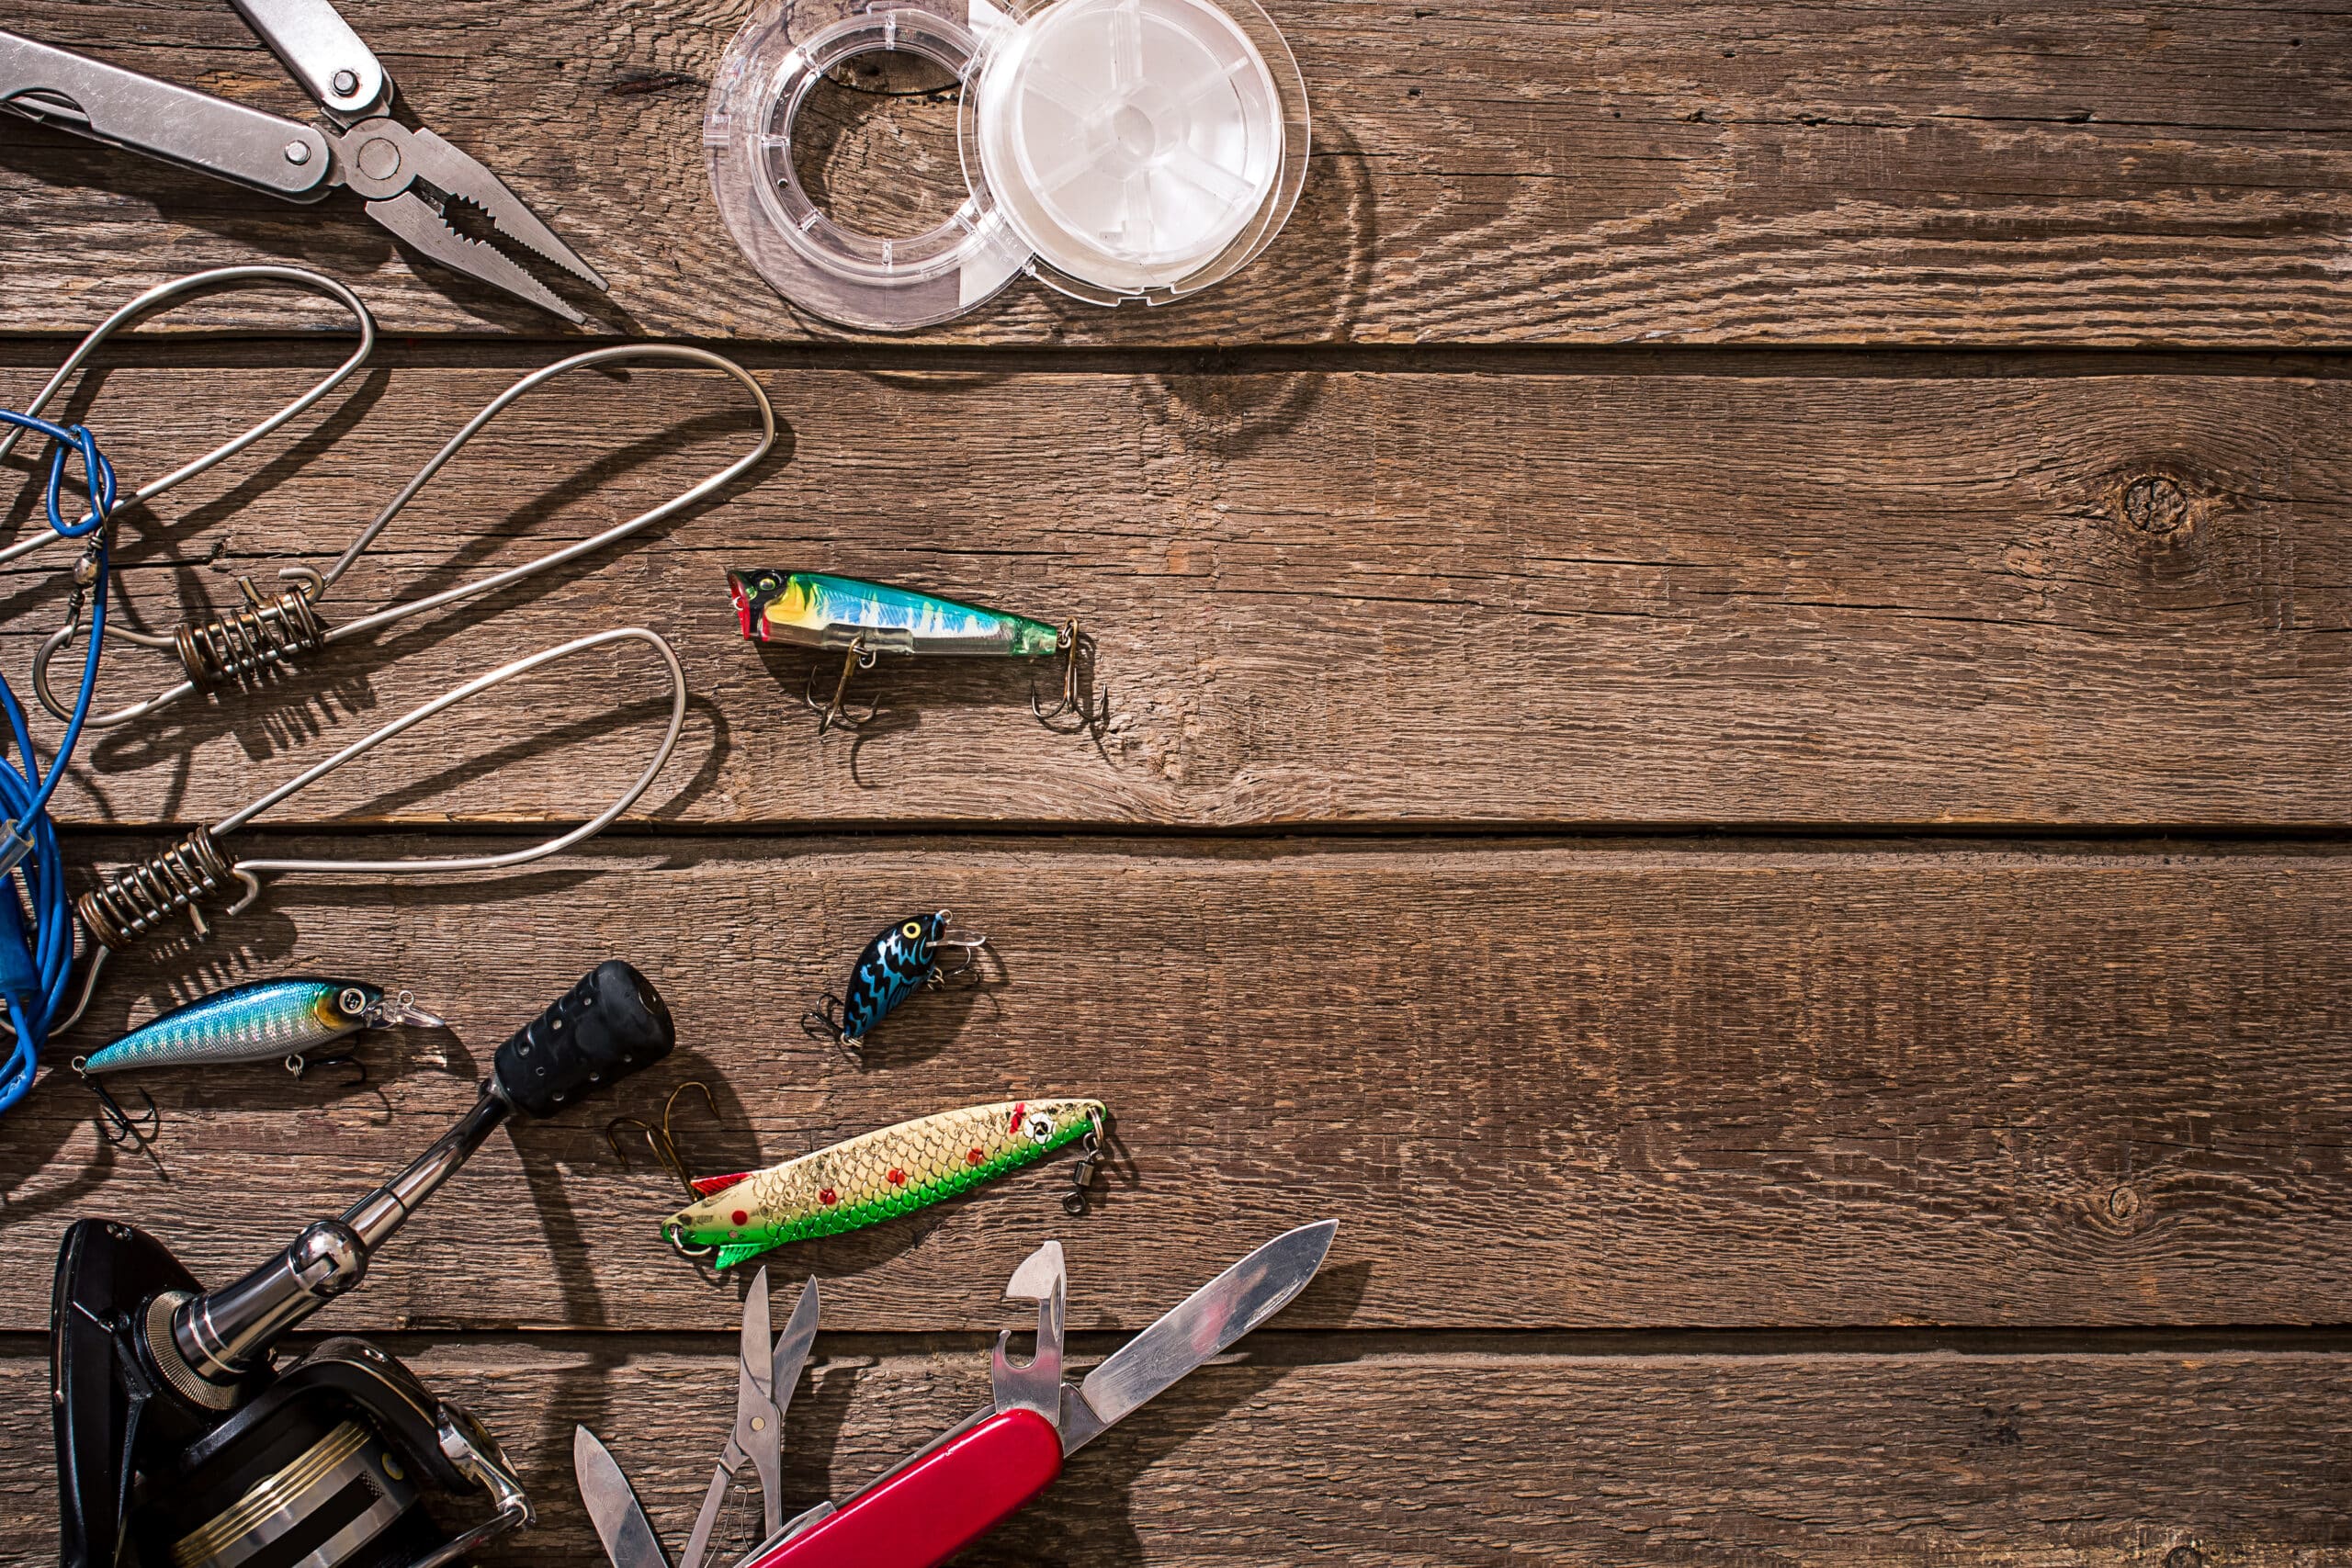 fanatic4fishing.com : Can you use vinegar to clean fishing lures?